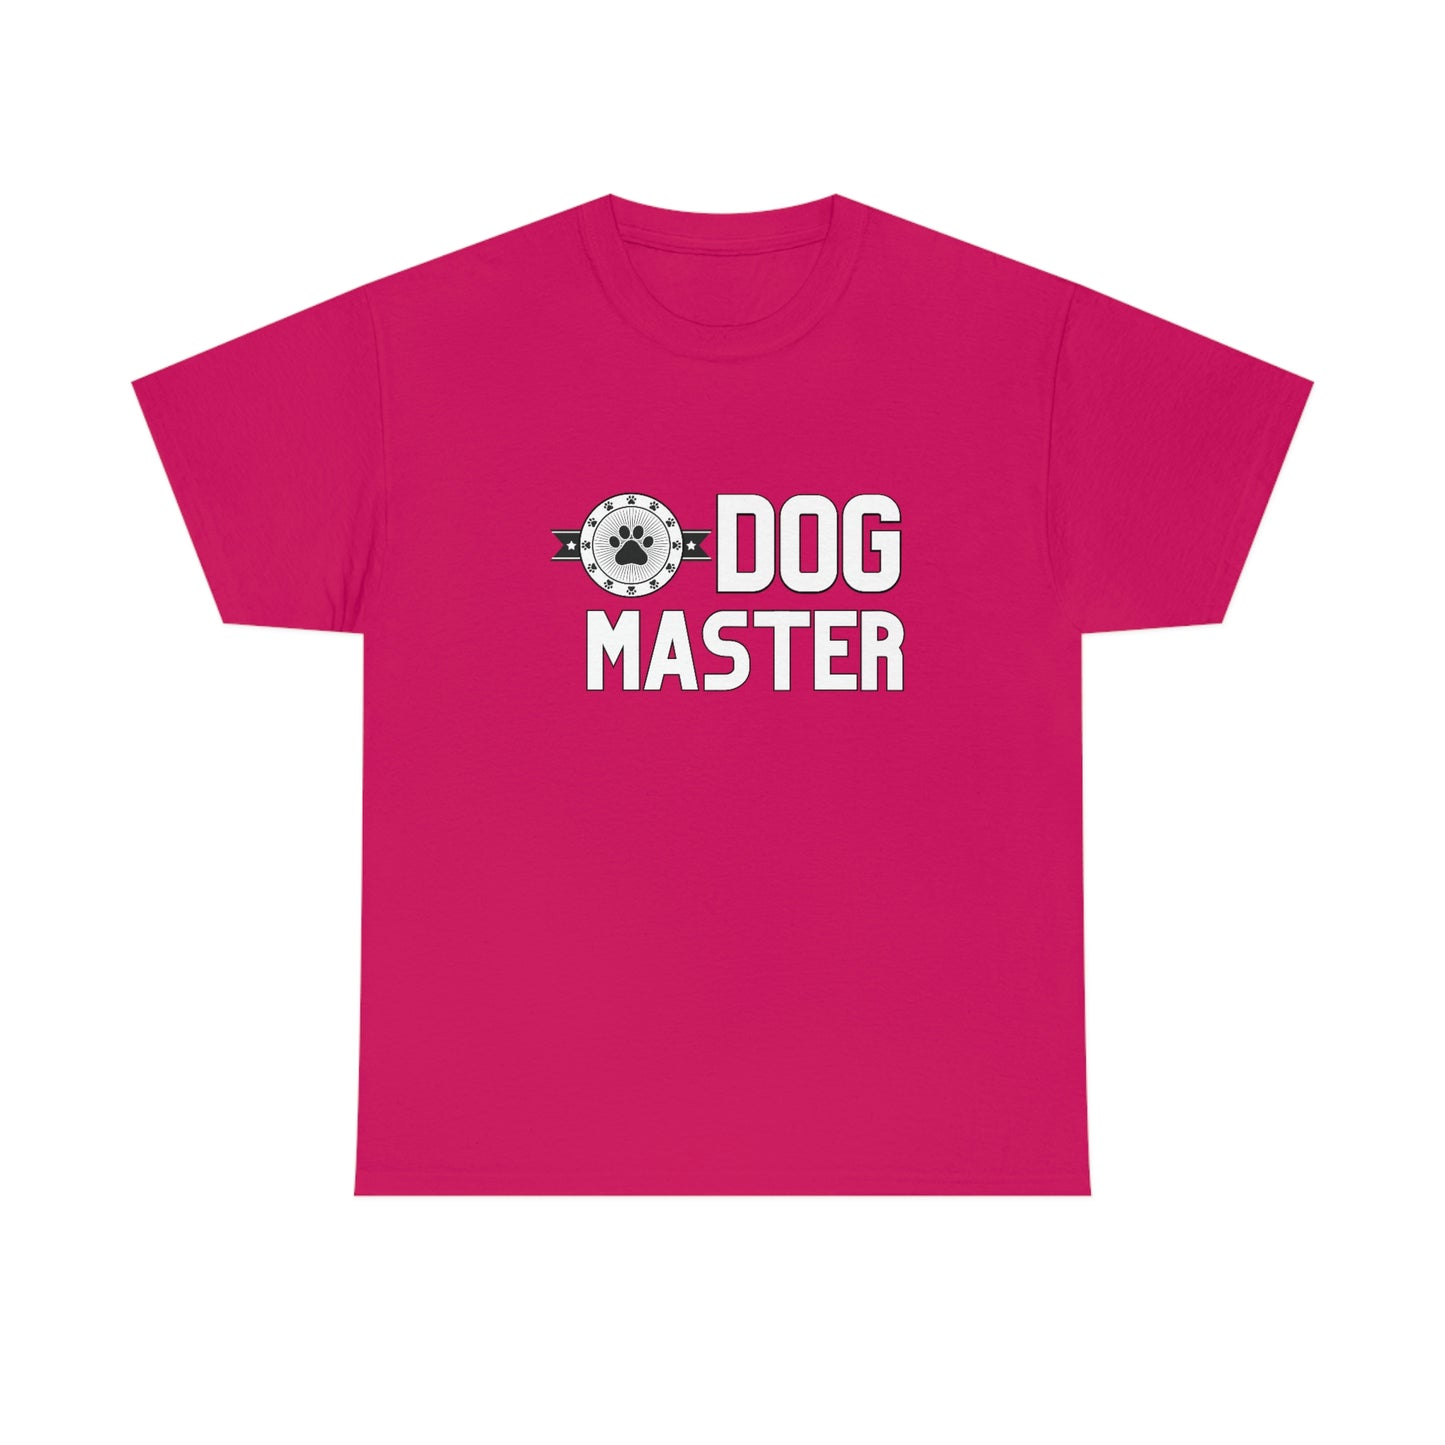 Dog Master with Paws logo/Stars design Graphic tee shirt